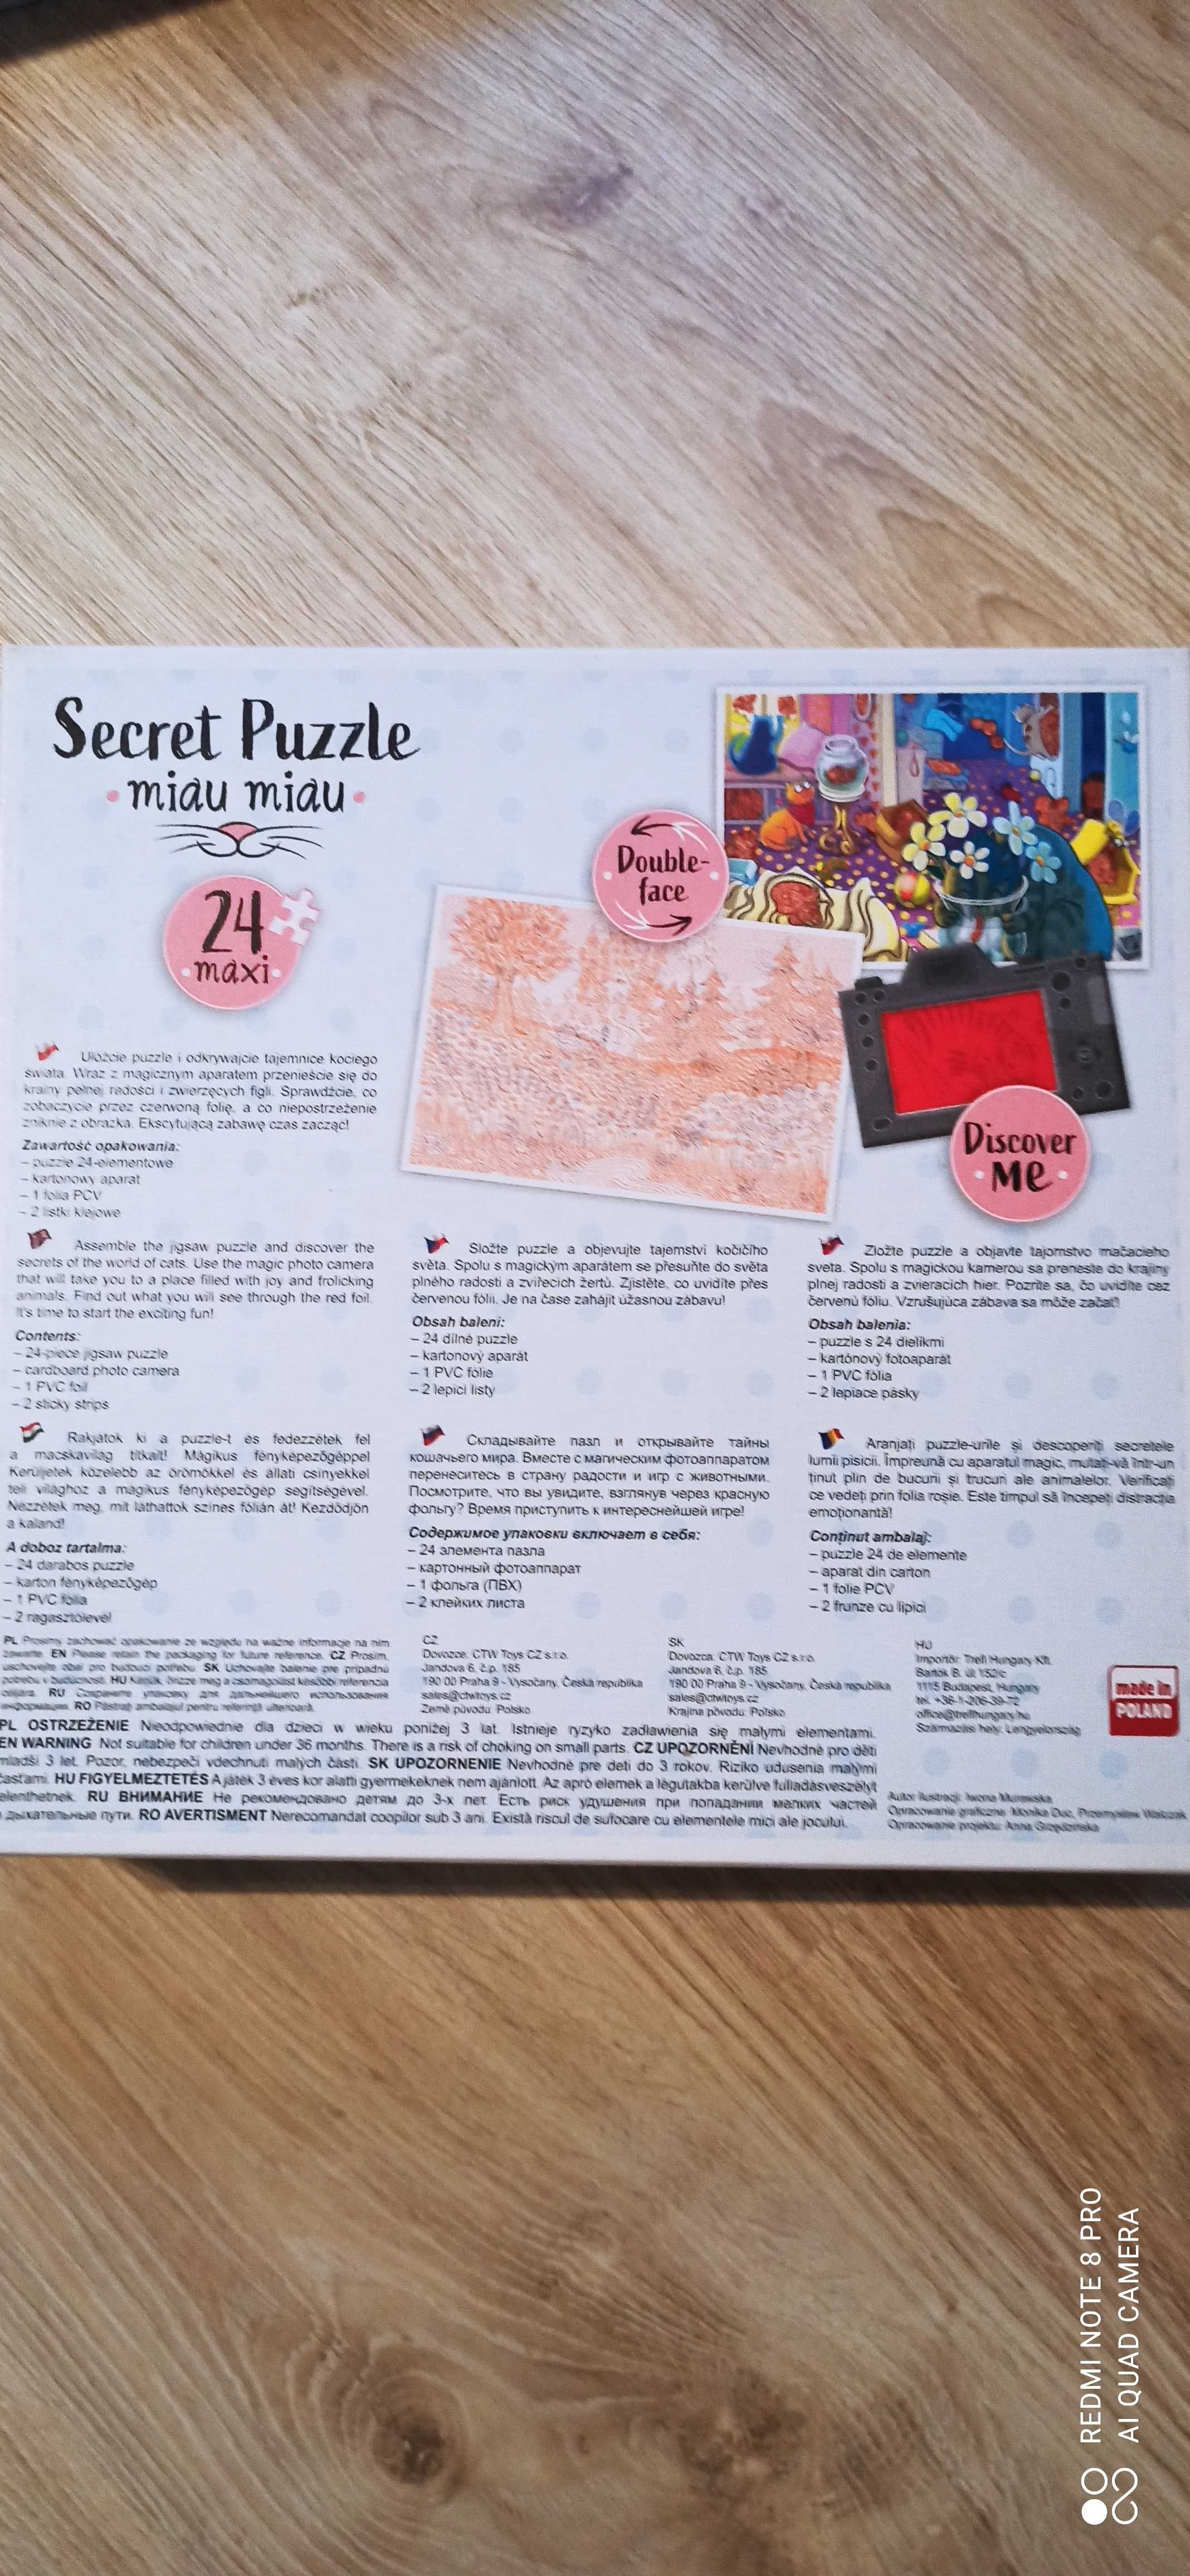 Puzzle Trefl Secret Miau miau Maxi 24 el.